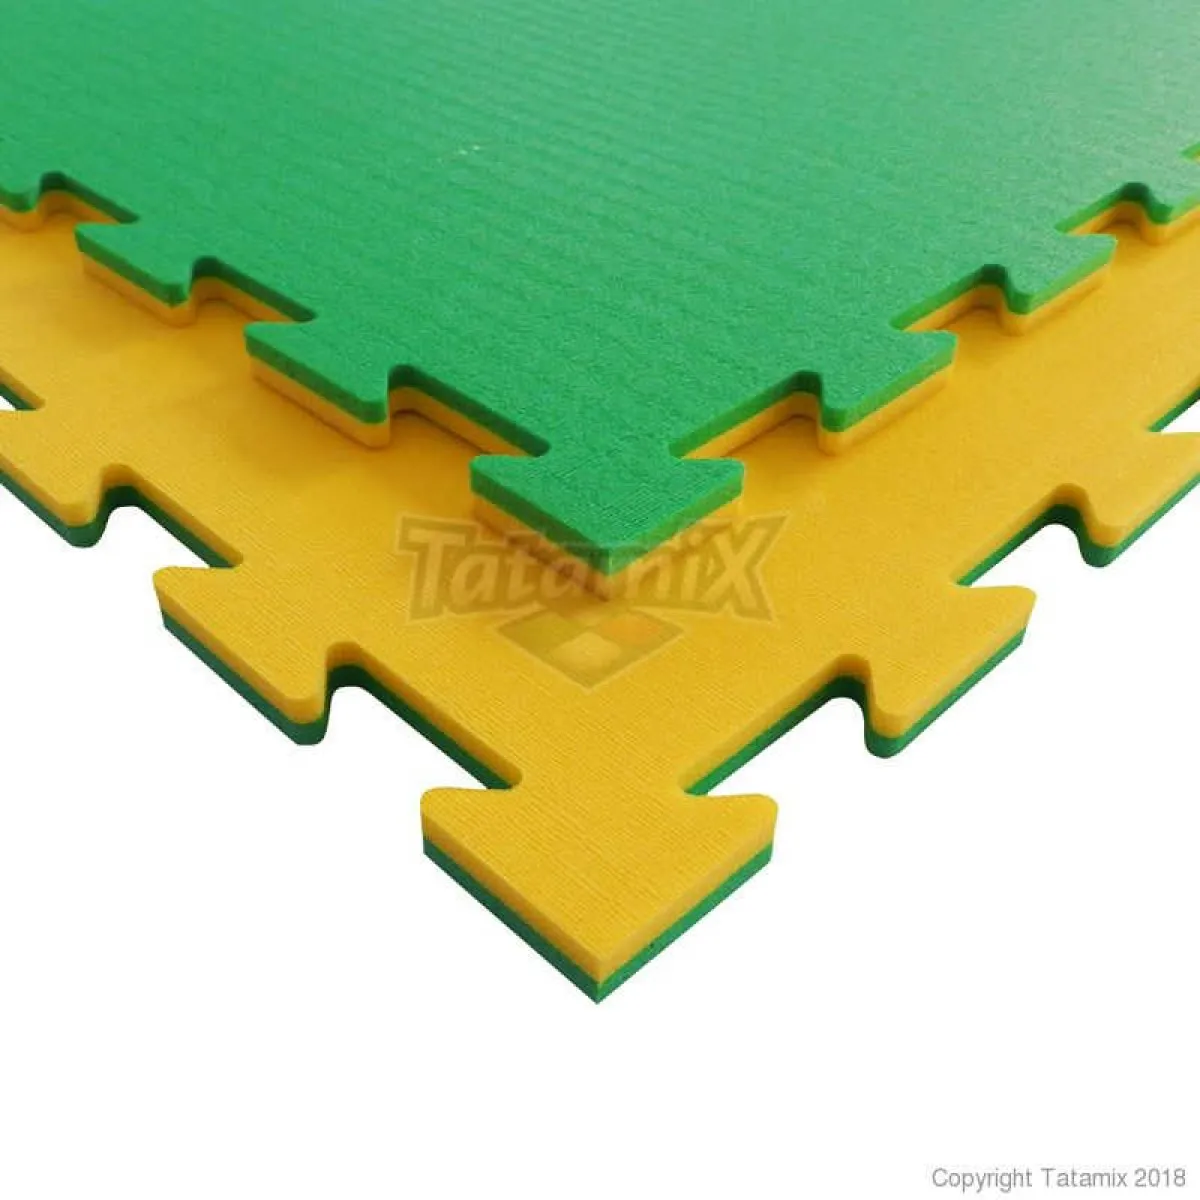 Martial arts mat Tatami School B14FR yellow/green 100 cm x 100 cm x 1.4 cm